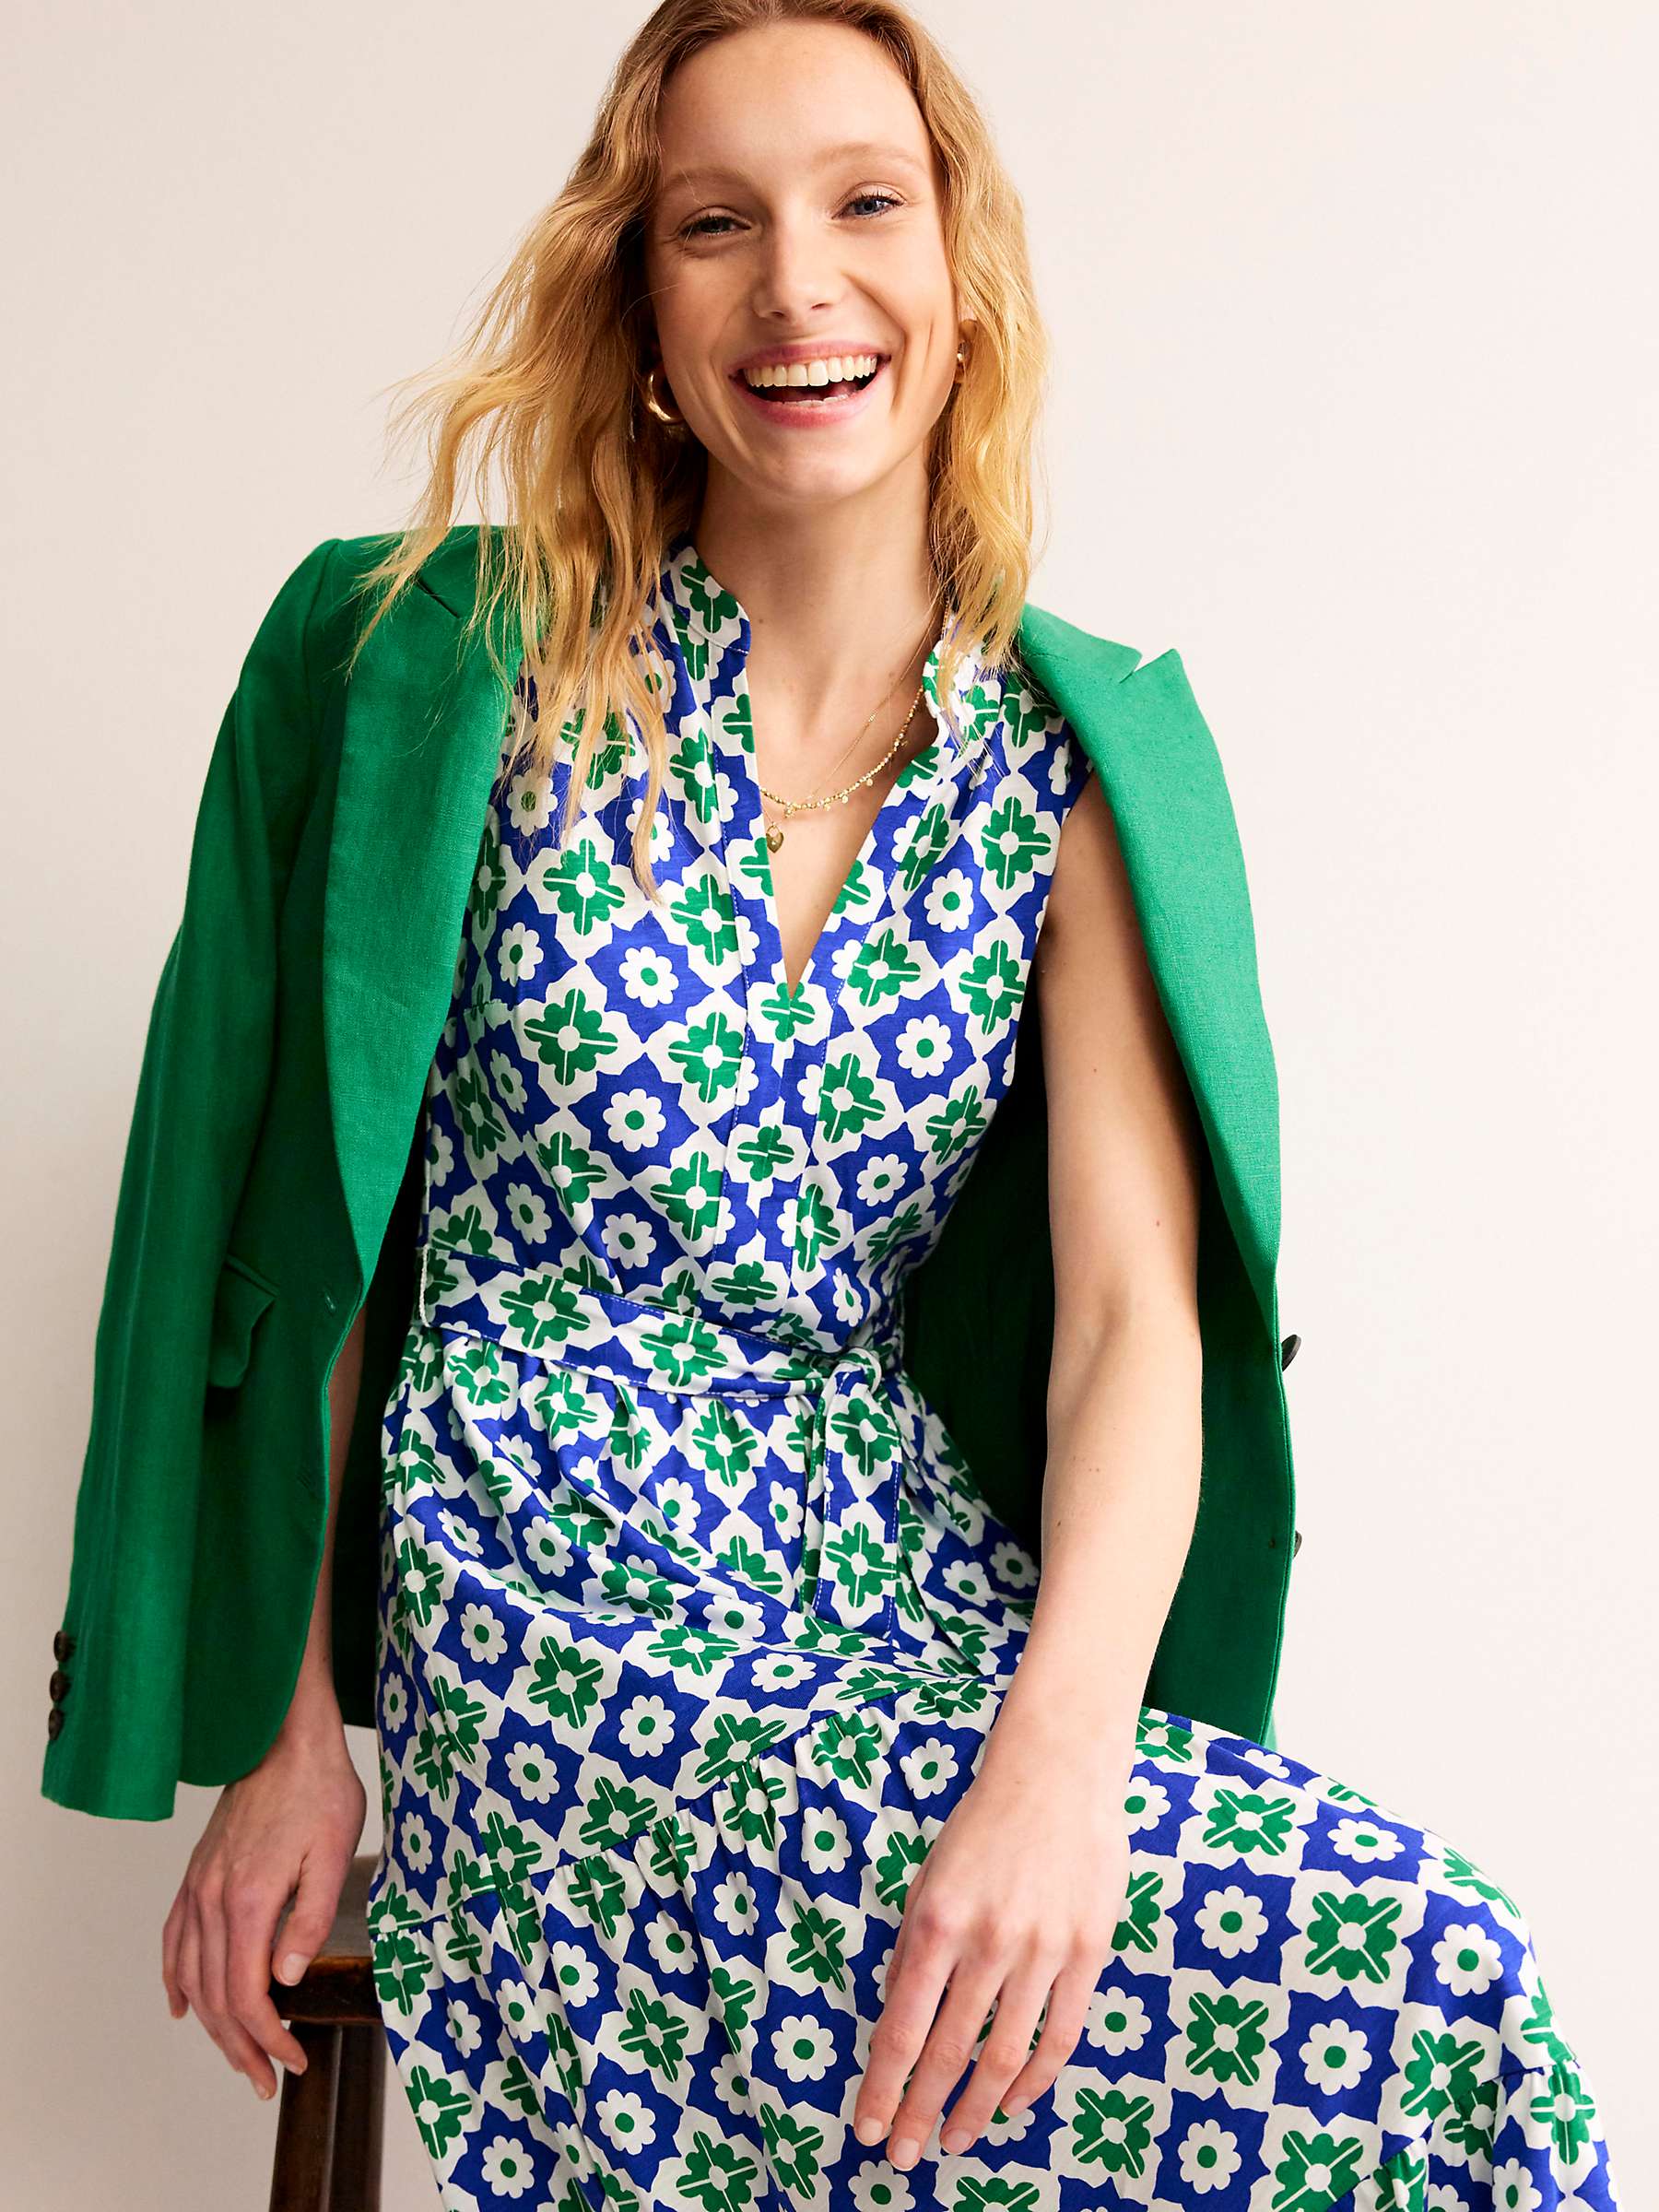 Buy Boden Naomi Notch Jersey Maxi Dress, Green/Multi Online at johnlewis.com